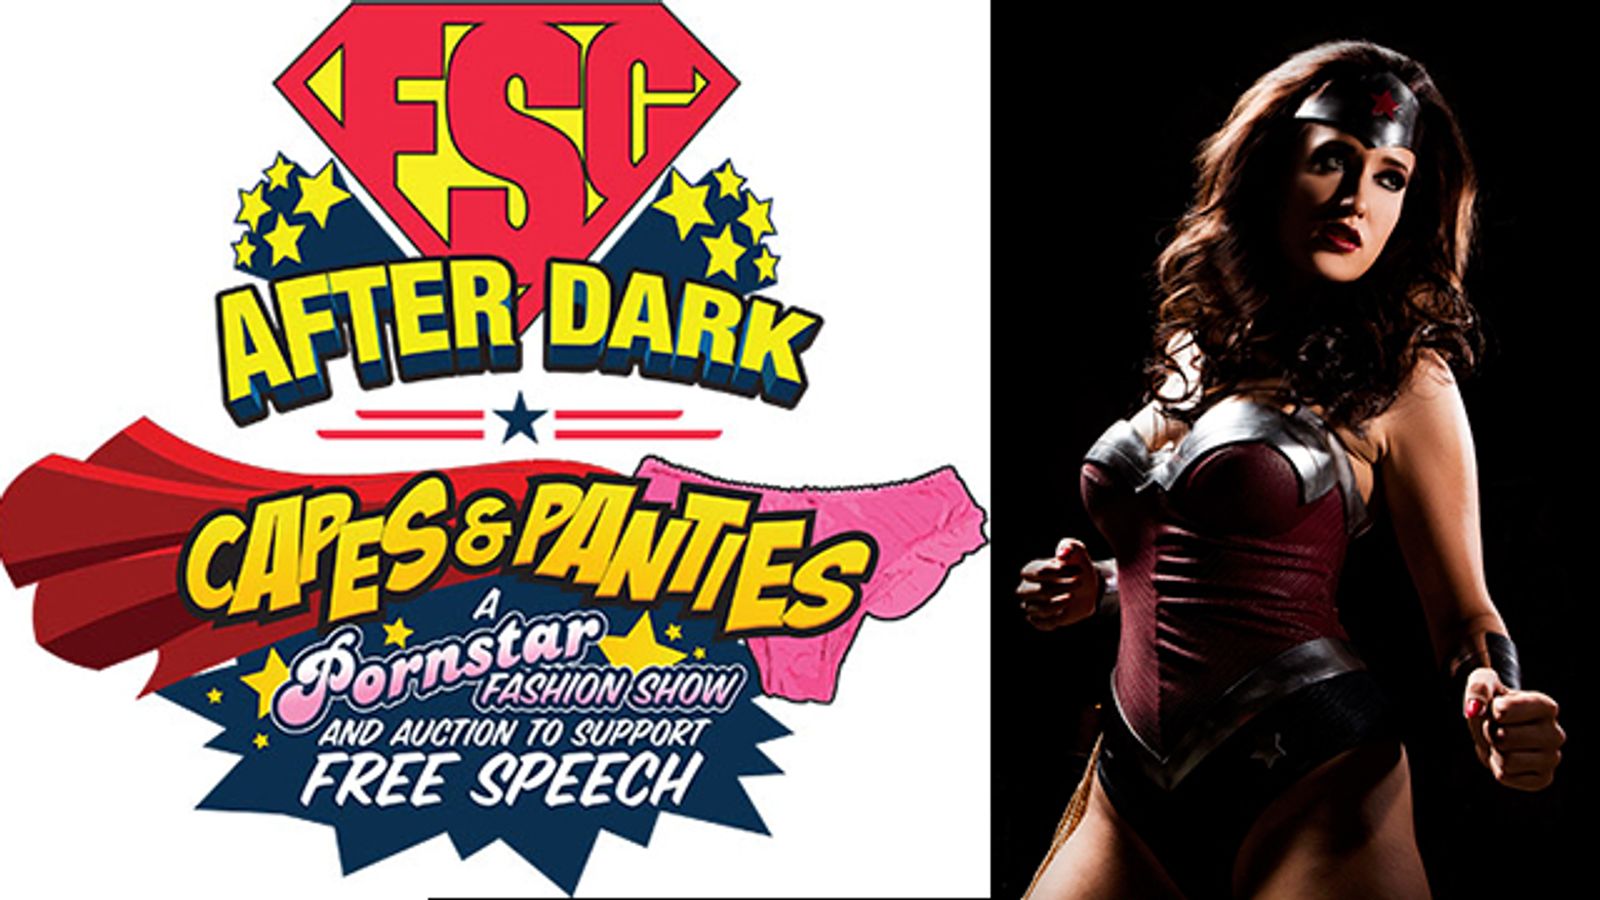 Don't Miss 'FSC After Dark' Fashion Show Fundraiser Sept 24